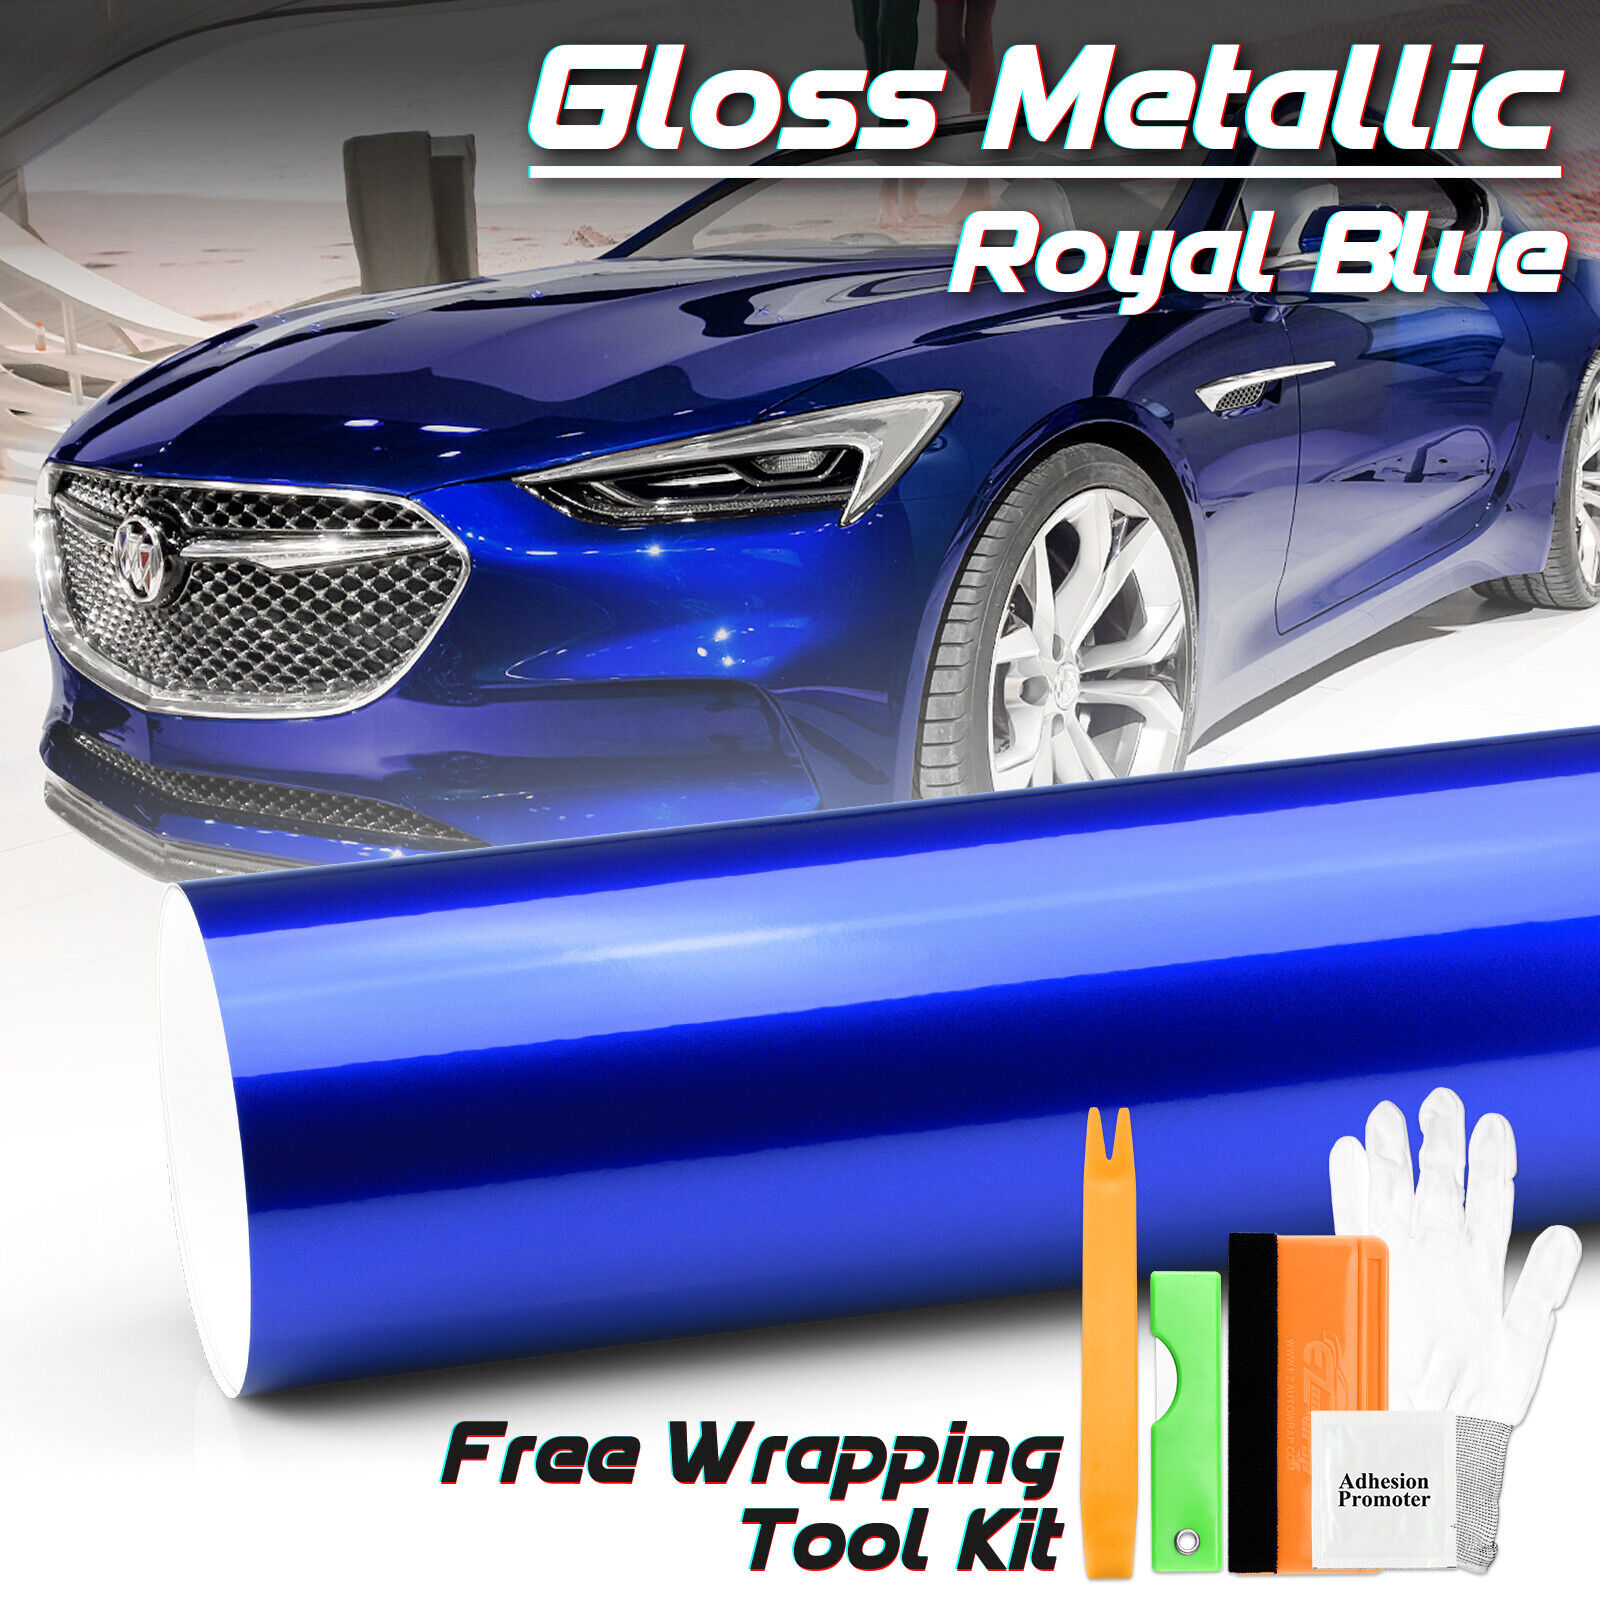 【Gloss Metallic】Glossy Candy Decal Car Vinyl Wrap Film Sticker Sheet Sparkle DIY